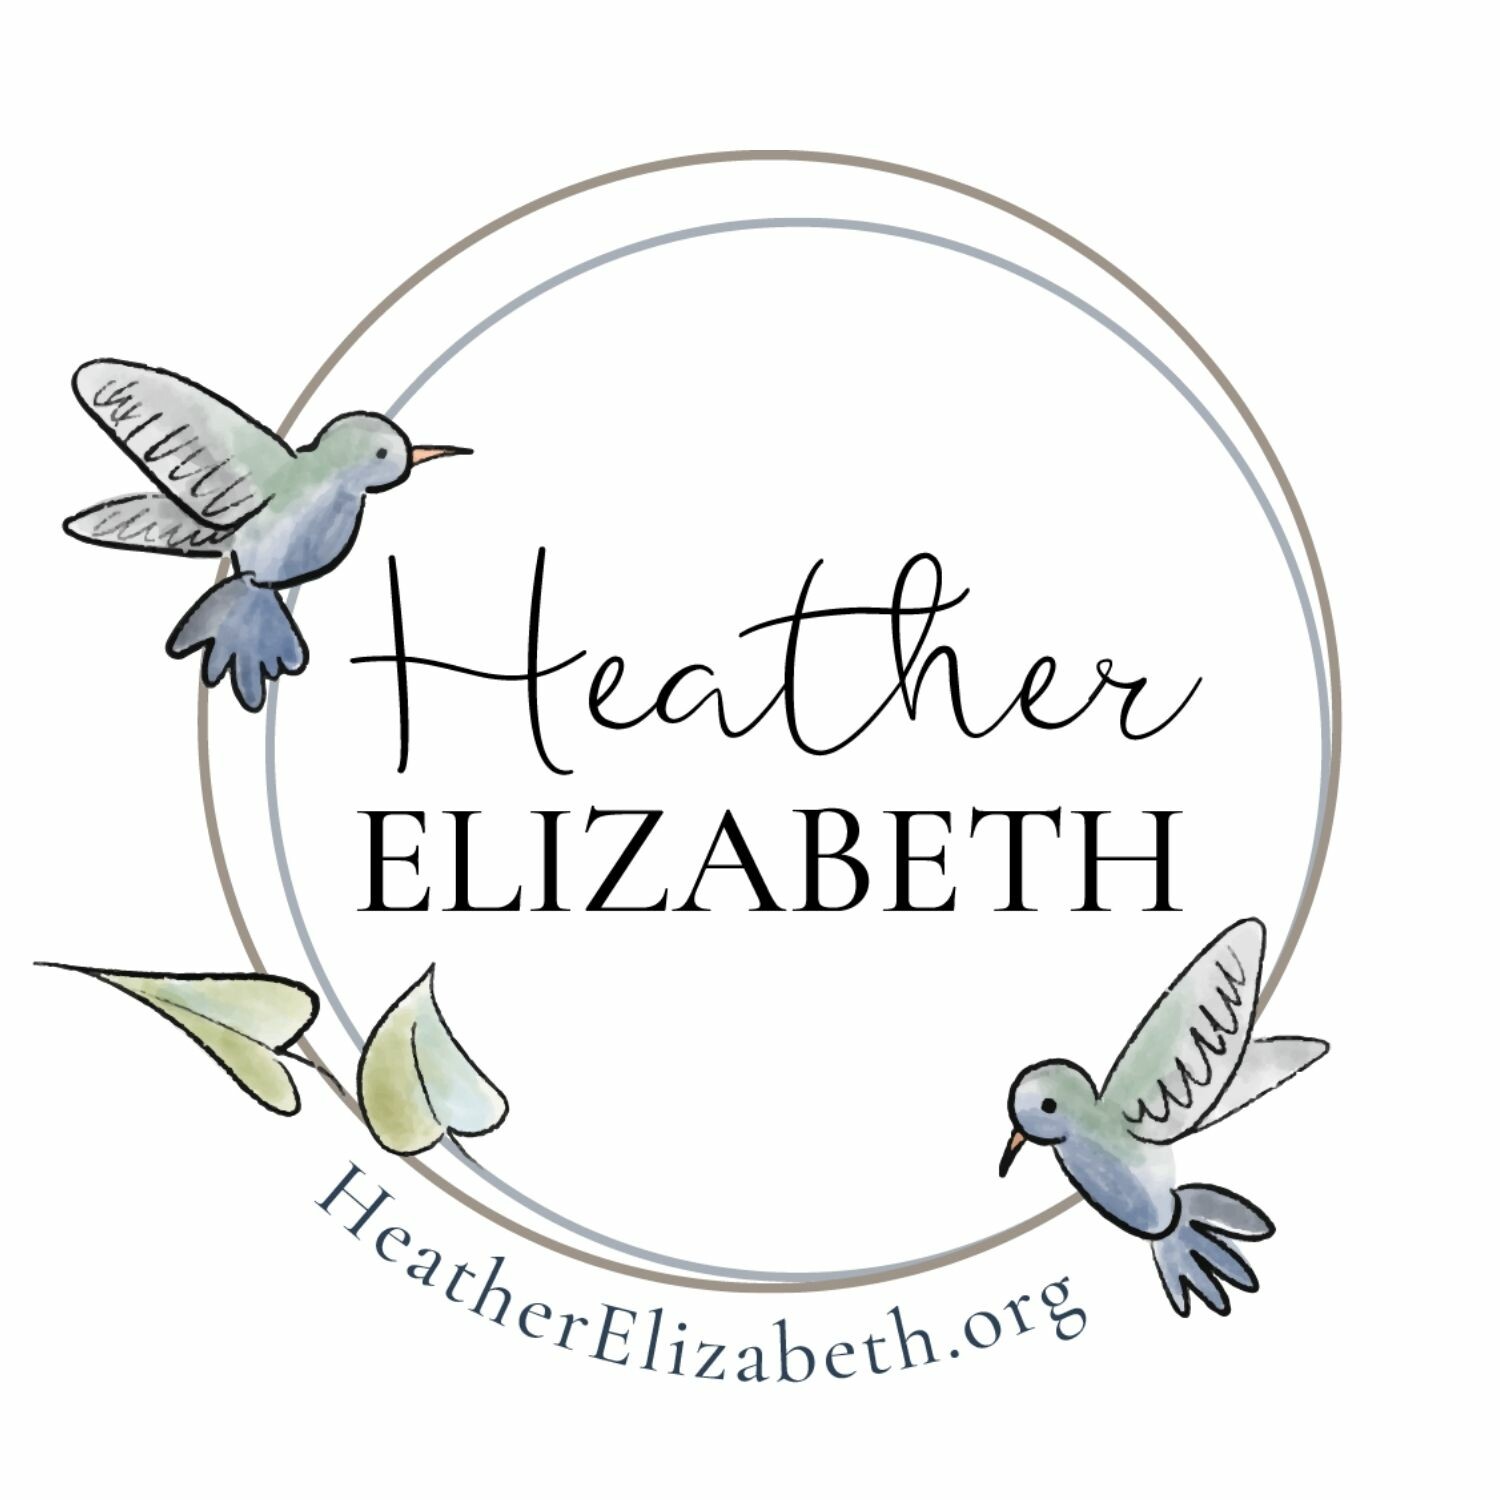 Heather Elizabeth 